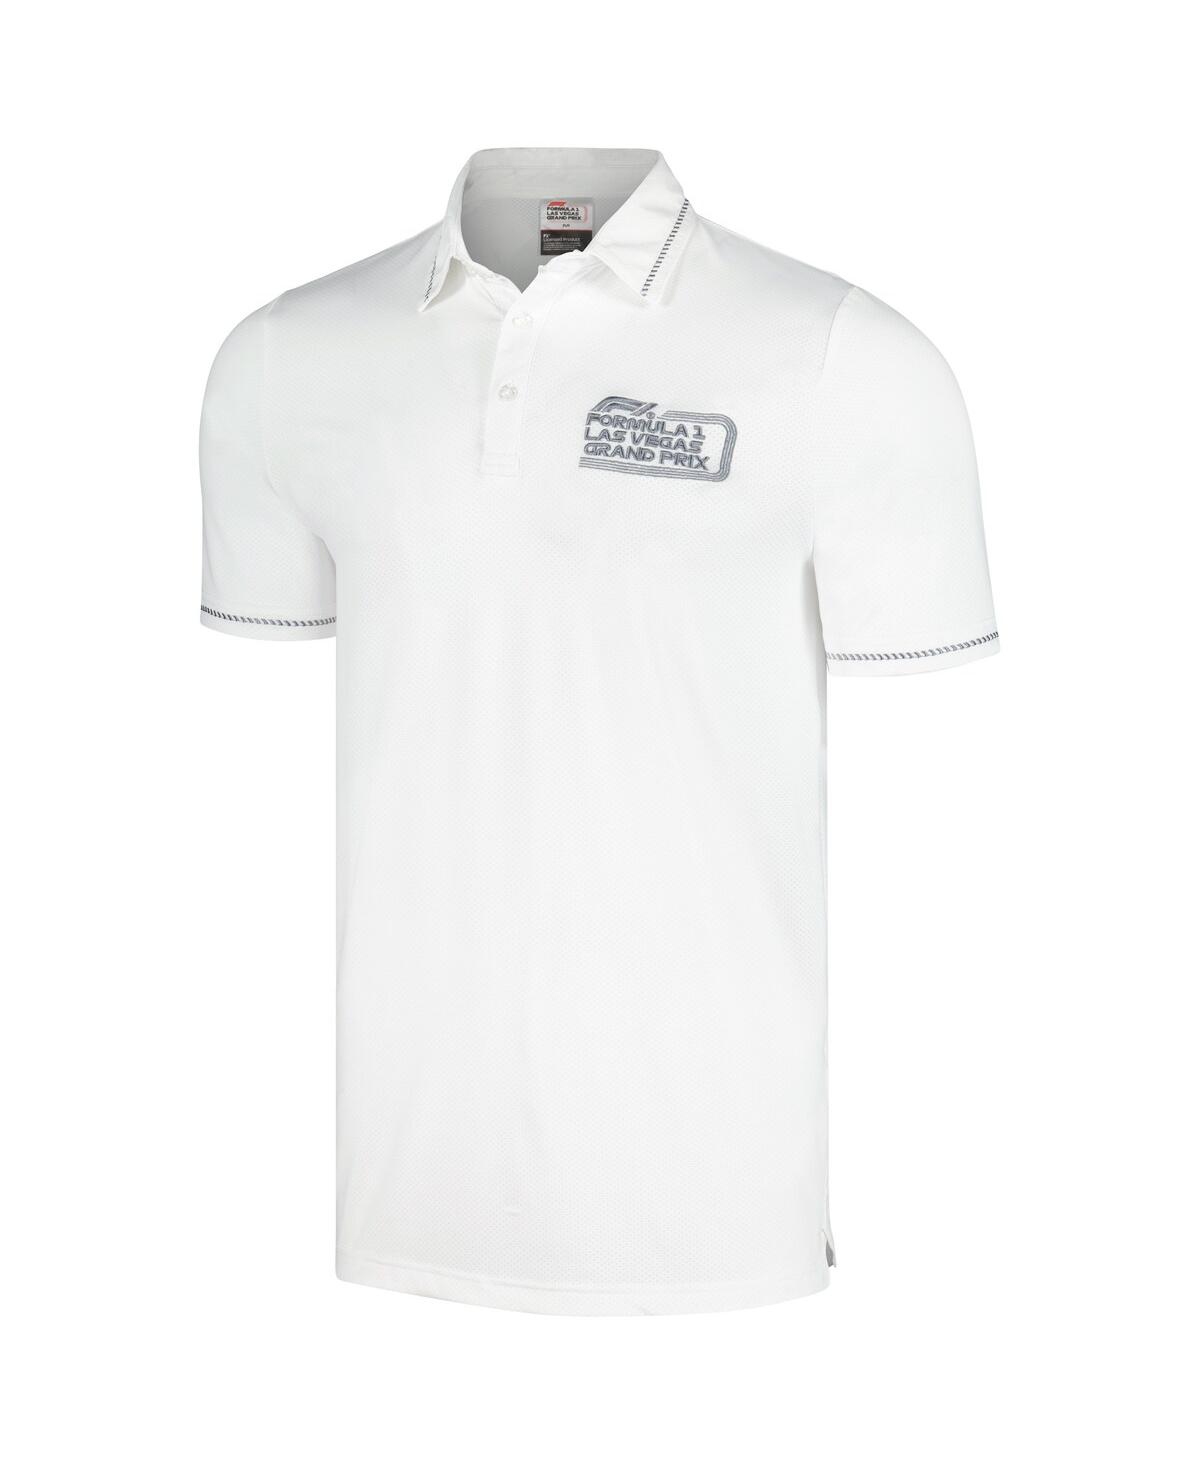 Shop Insomniac Men's And Women's Formula 1 Las Vegas Grand Prix White Classic Polo Shirt